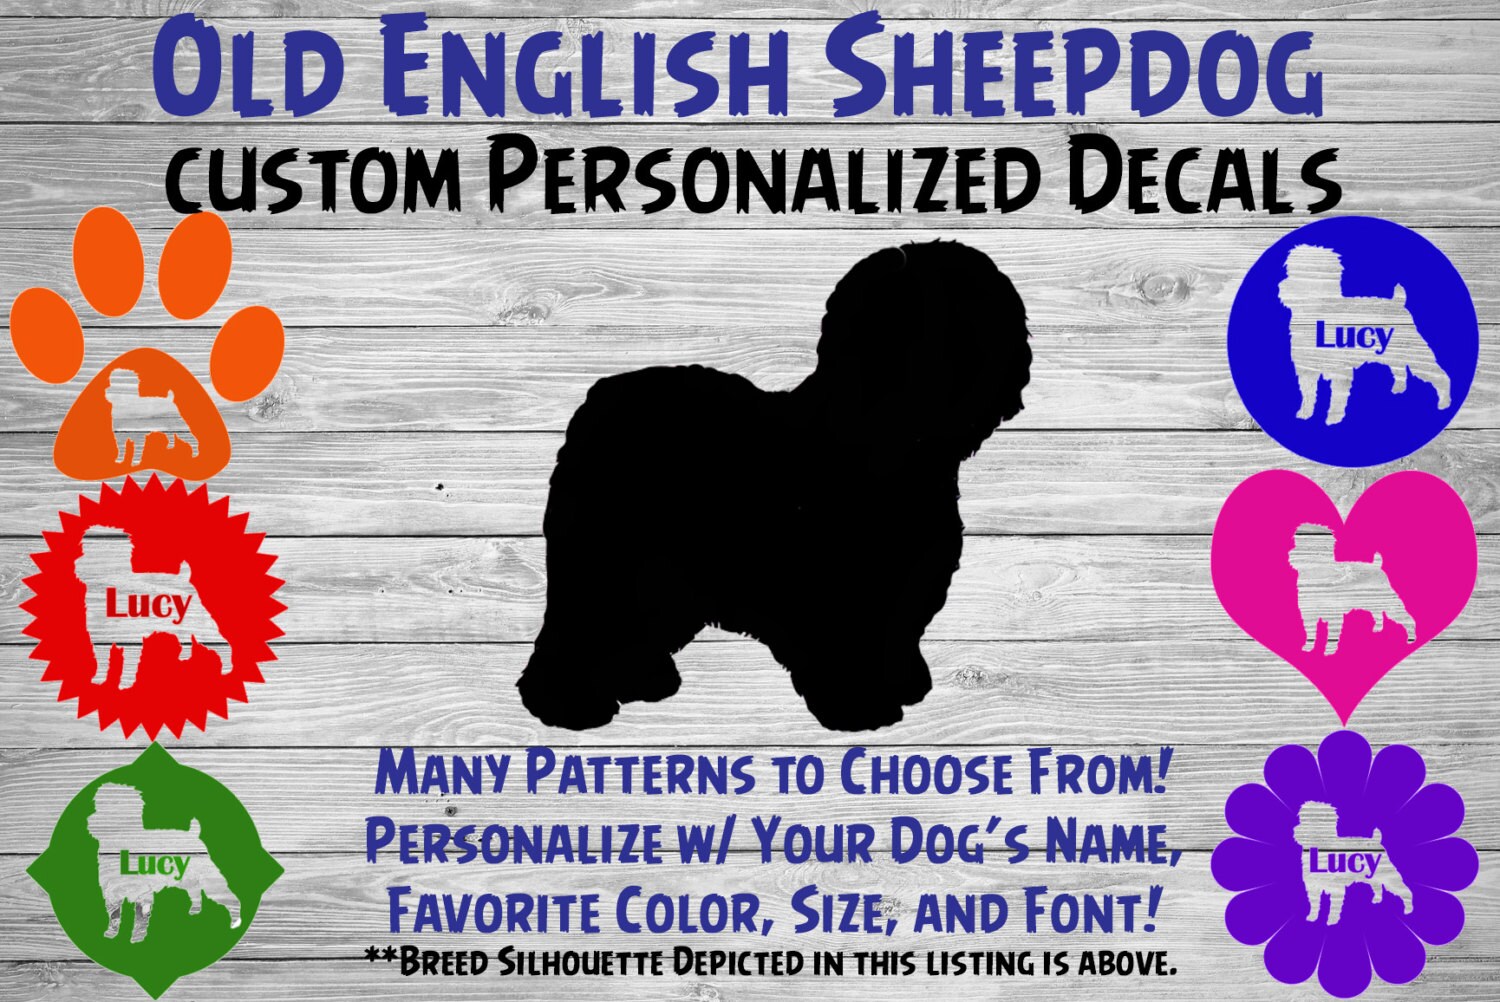 Livin' The Sheepdog Life - Toby Old English Sheepdog dog Decal / Sticker